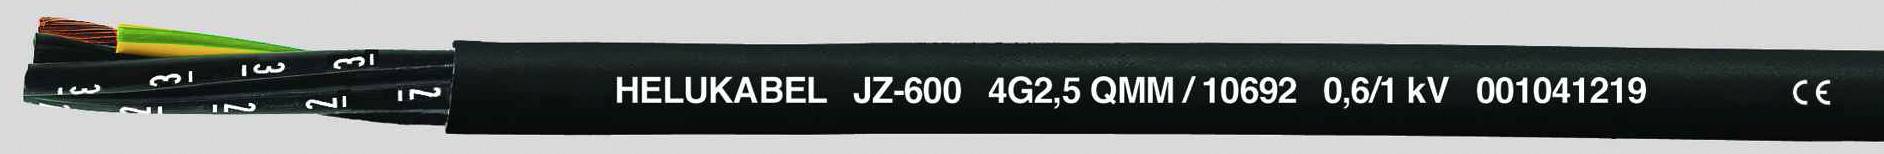 HELUKABEL JZ-600 Steuerleitung 3 G 1.50 mm² Schwarz 10657-1000 1000 m